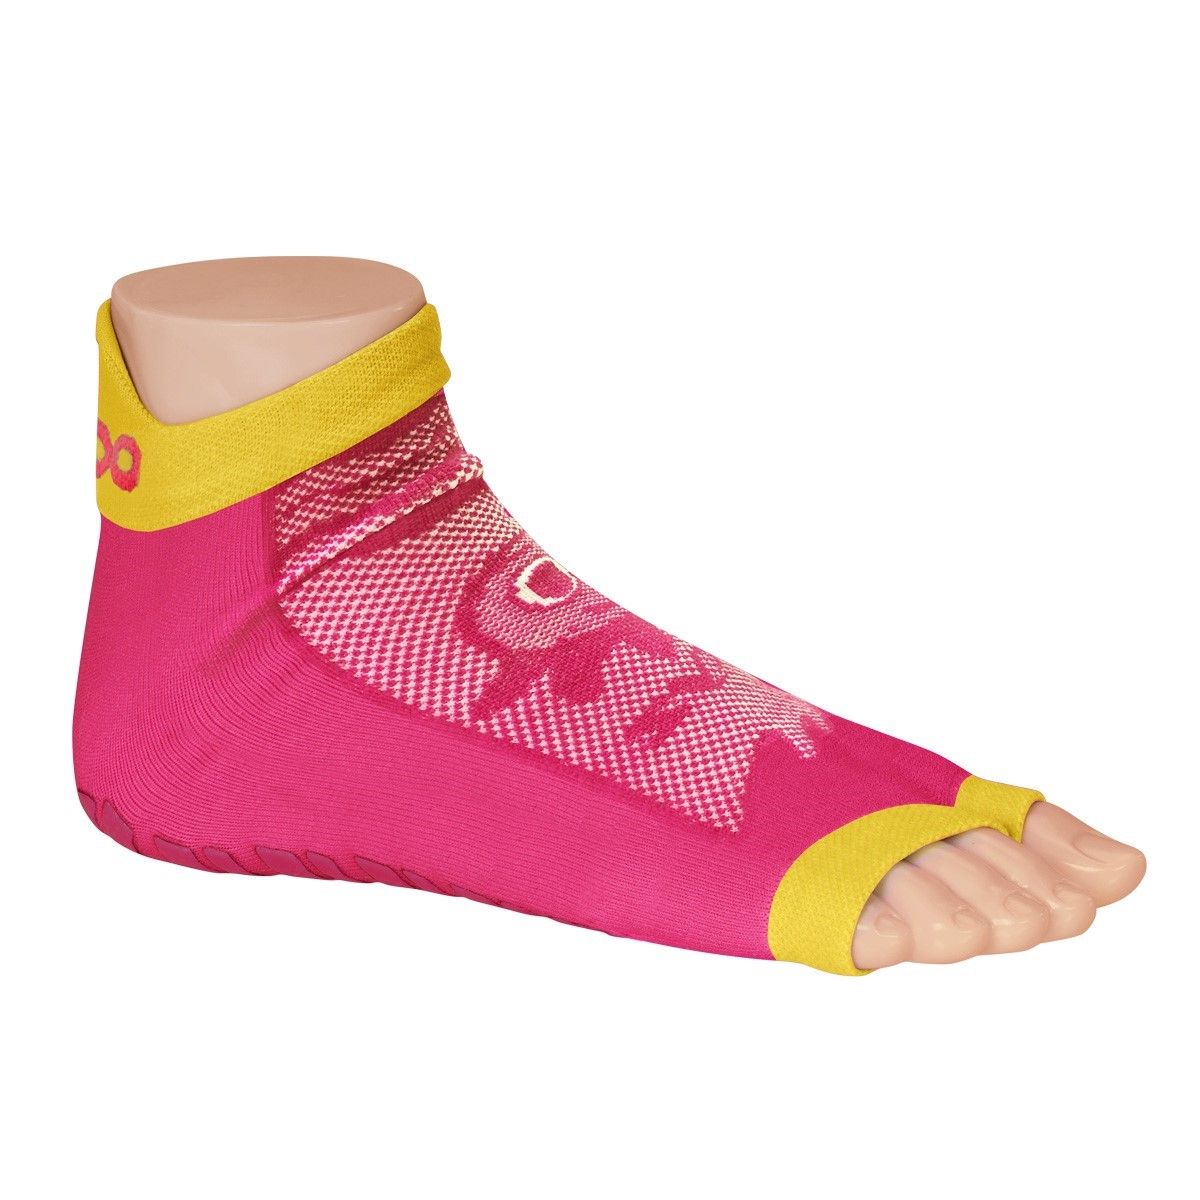 Sweakers Anti-Rutsch-Schwimm-Socken, pink, Größe 23-26